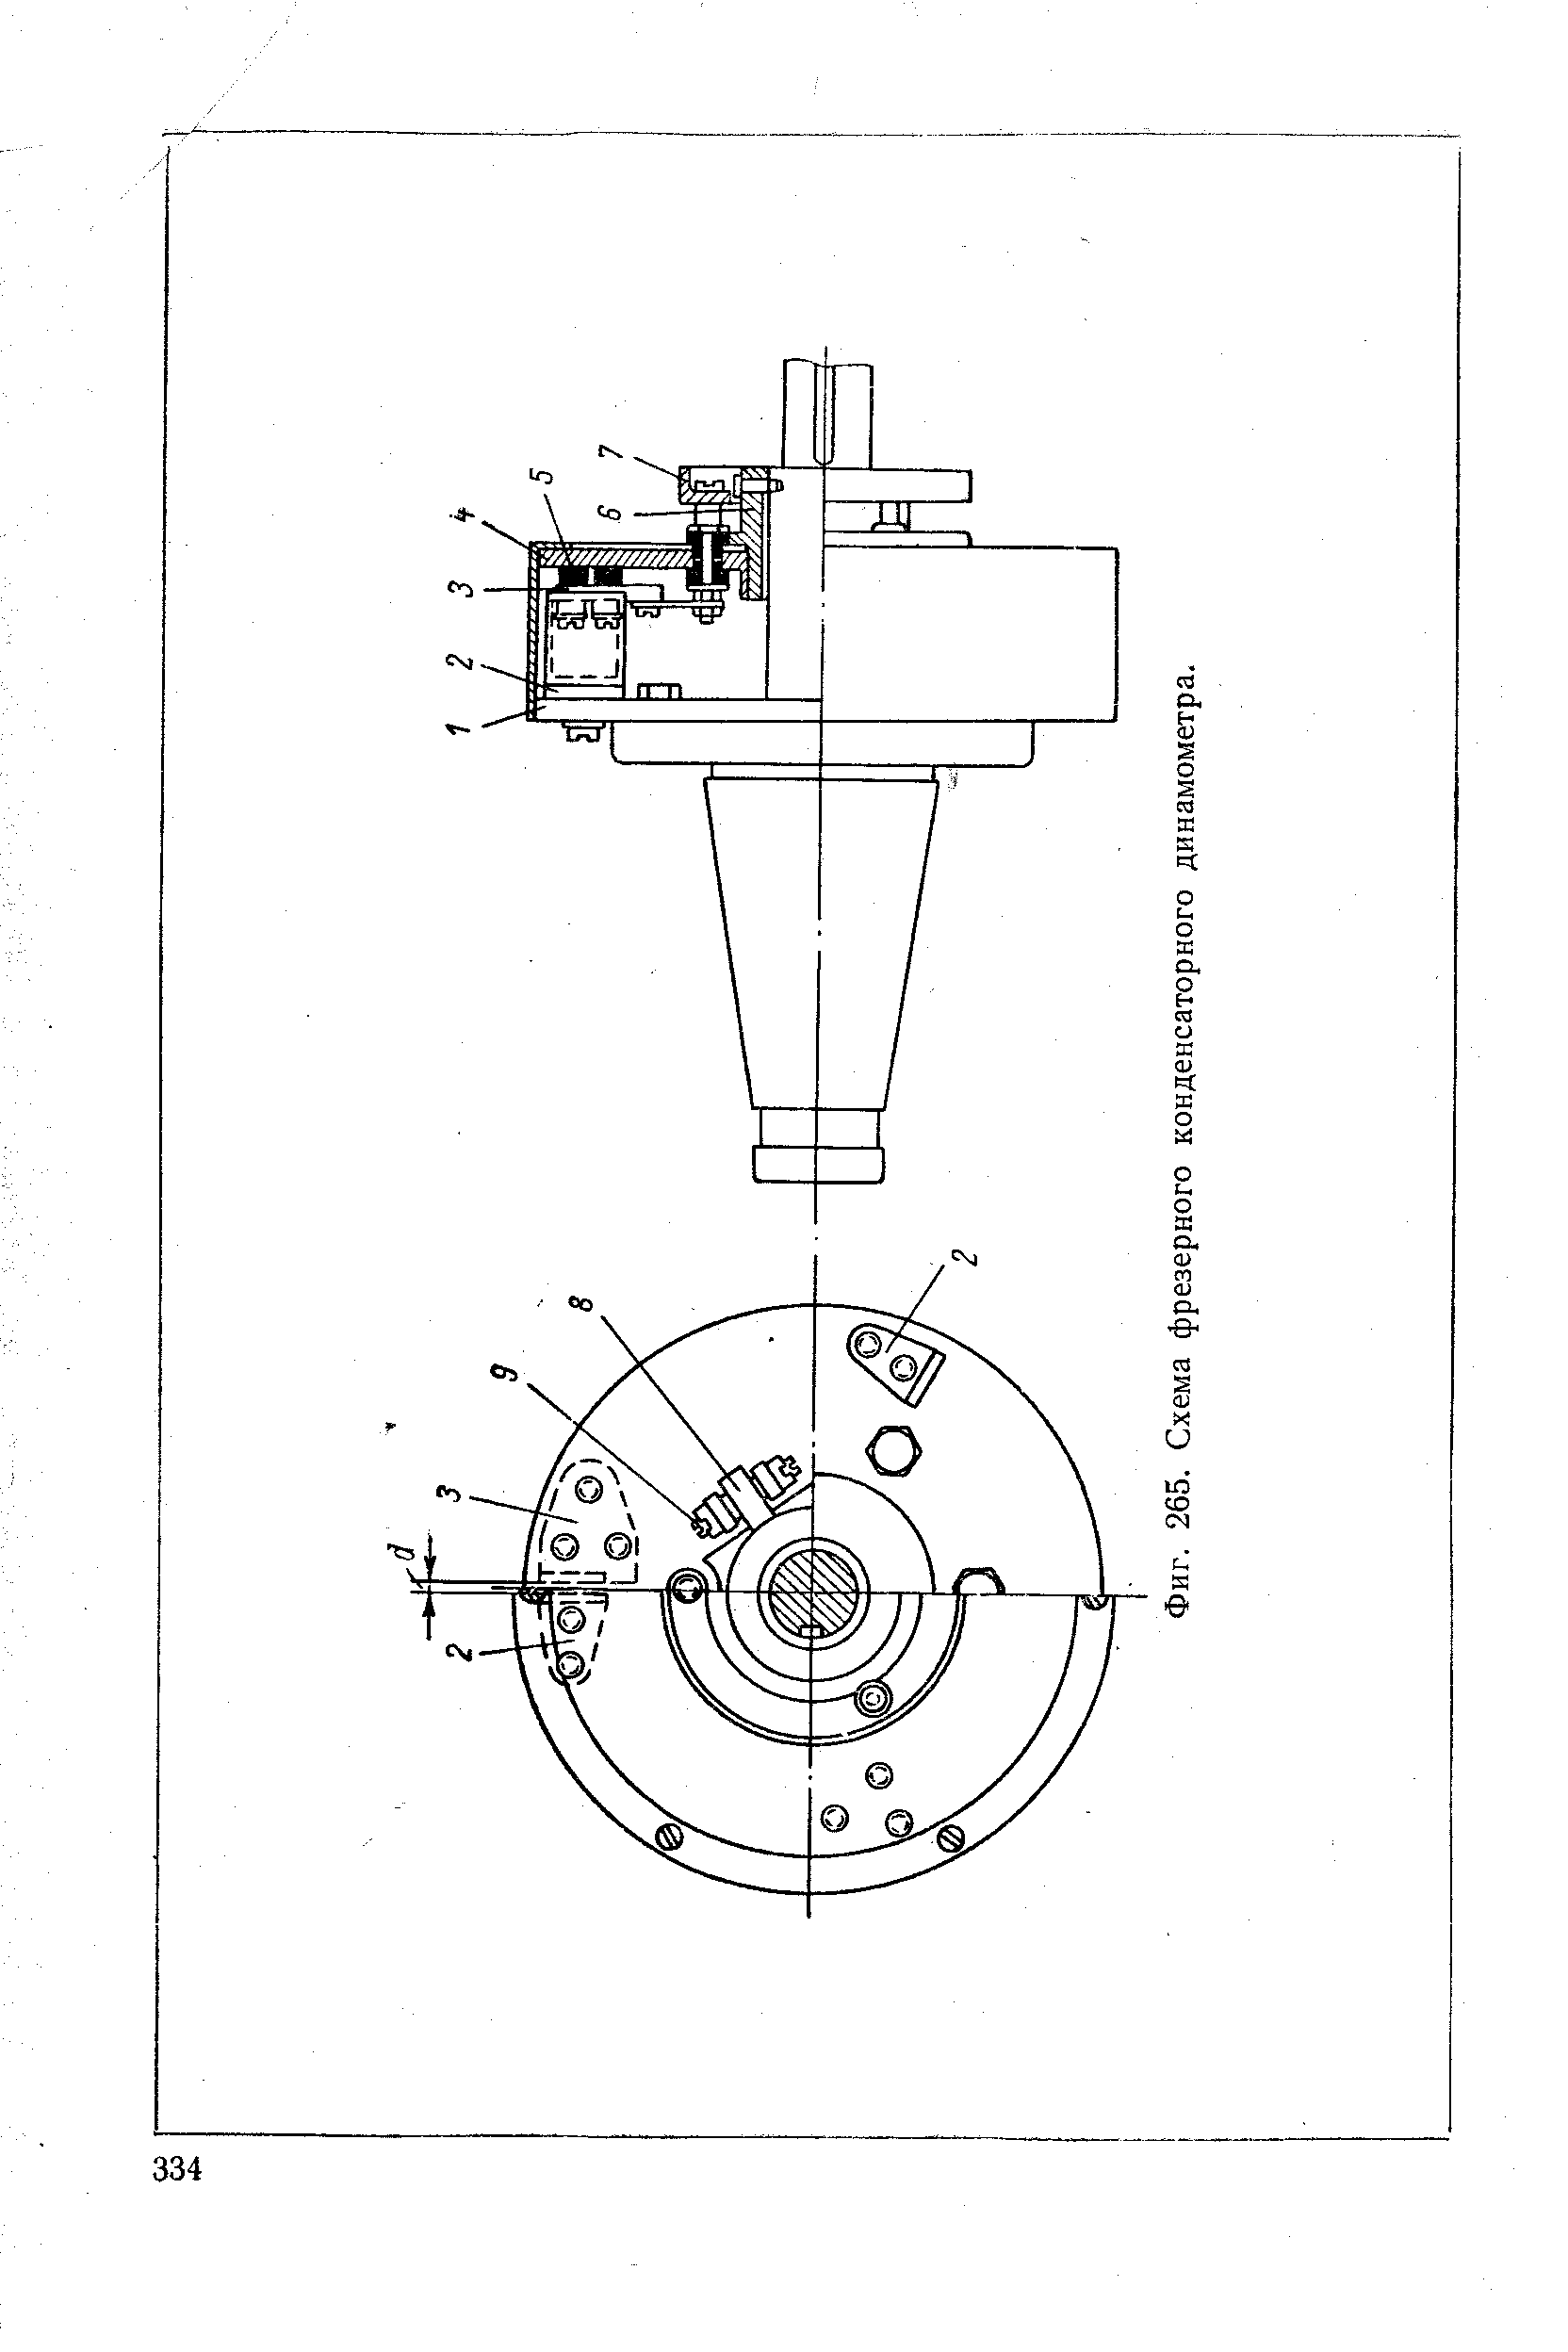 Фиг. 265. Схема фрезерного конденсаторного динамометра.
